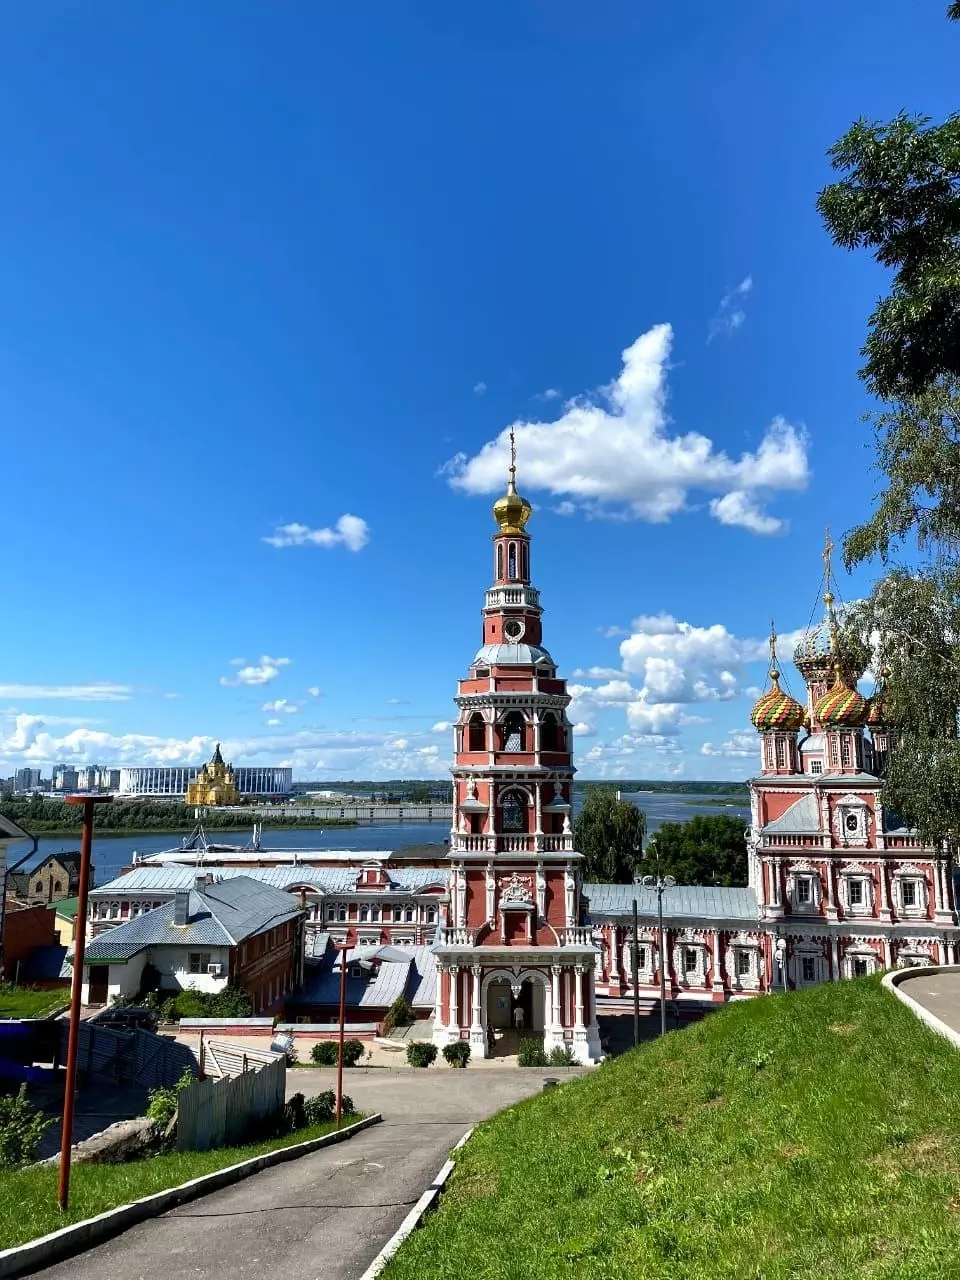 Нижний Новгород — прекрасен своими закатами и видами на Волгу